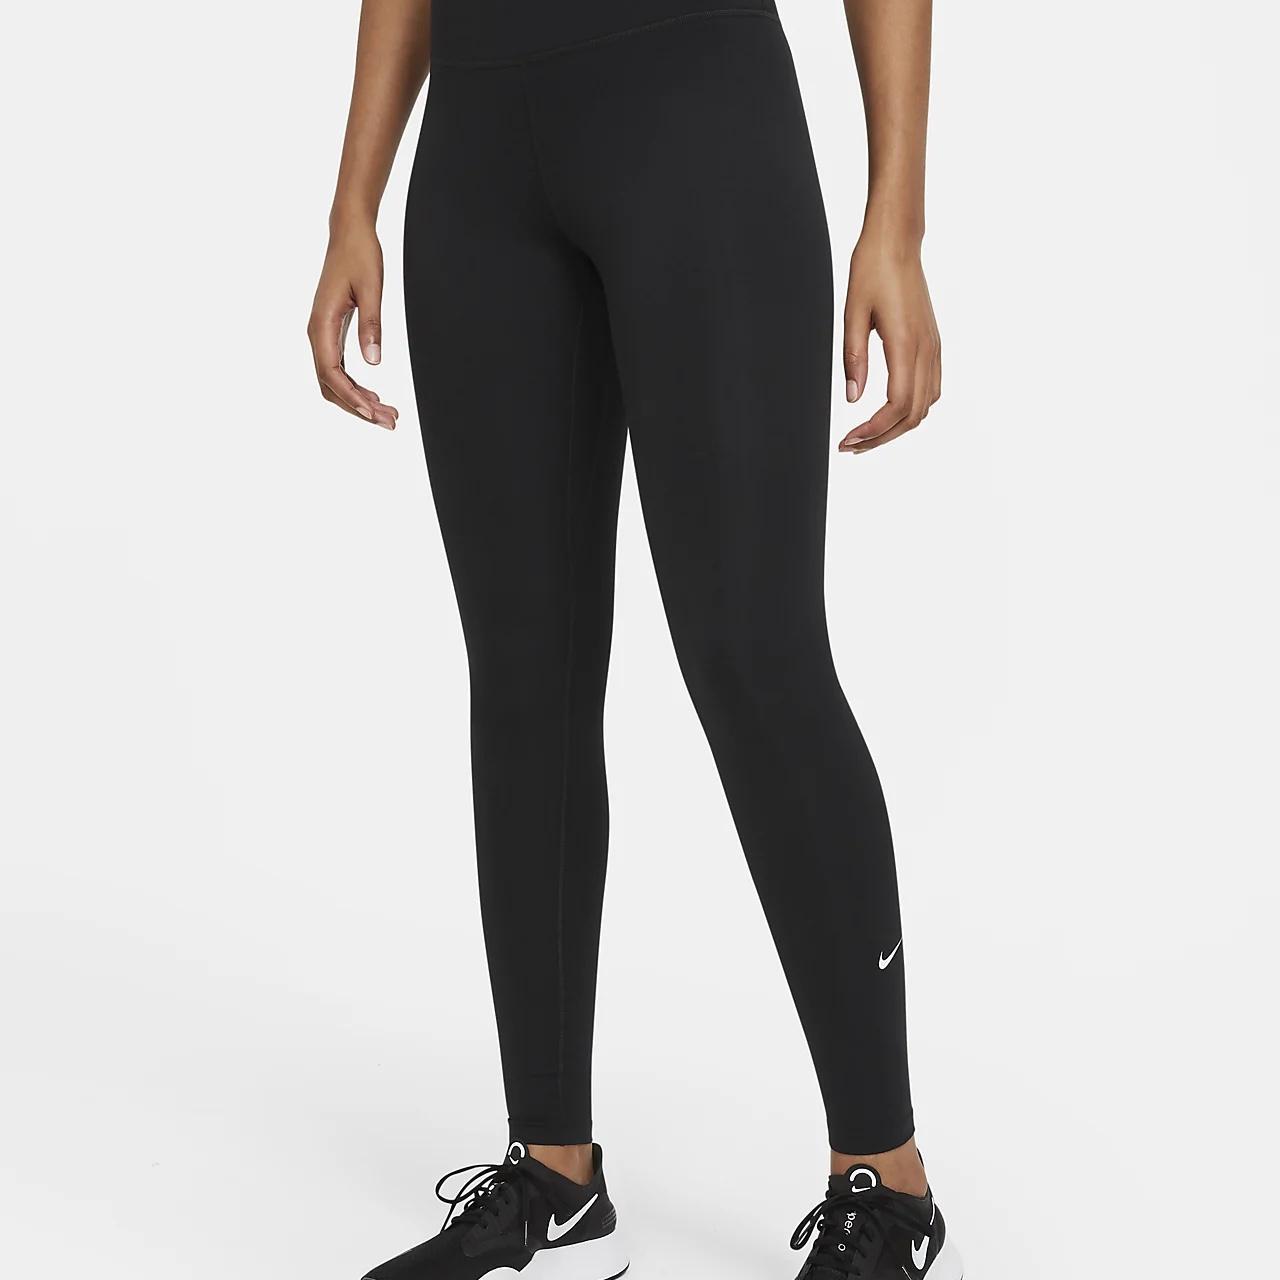 Womens Small black Nike leggings - Depop